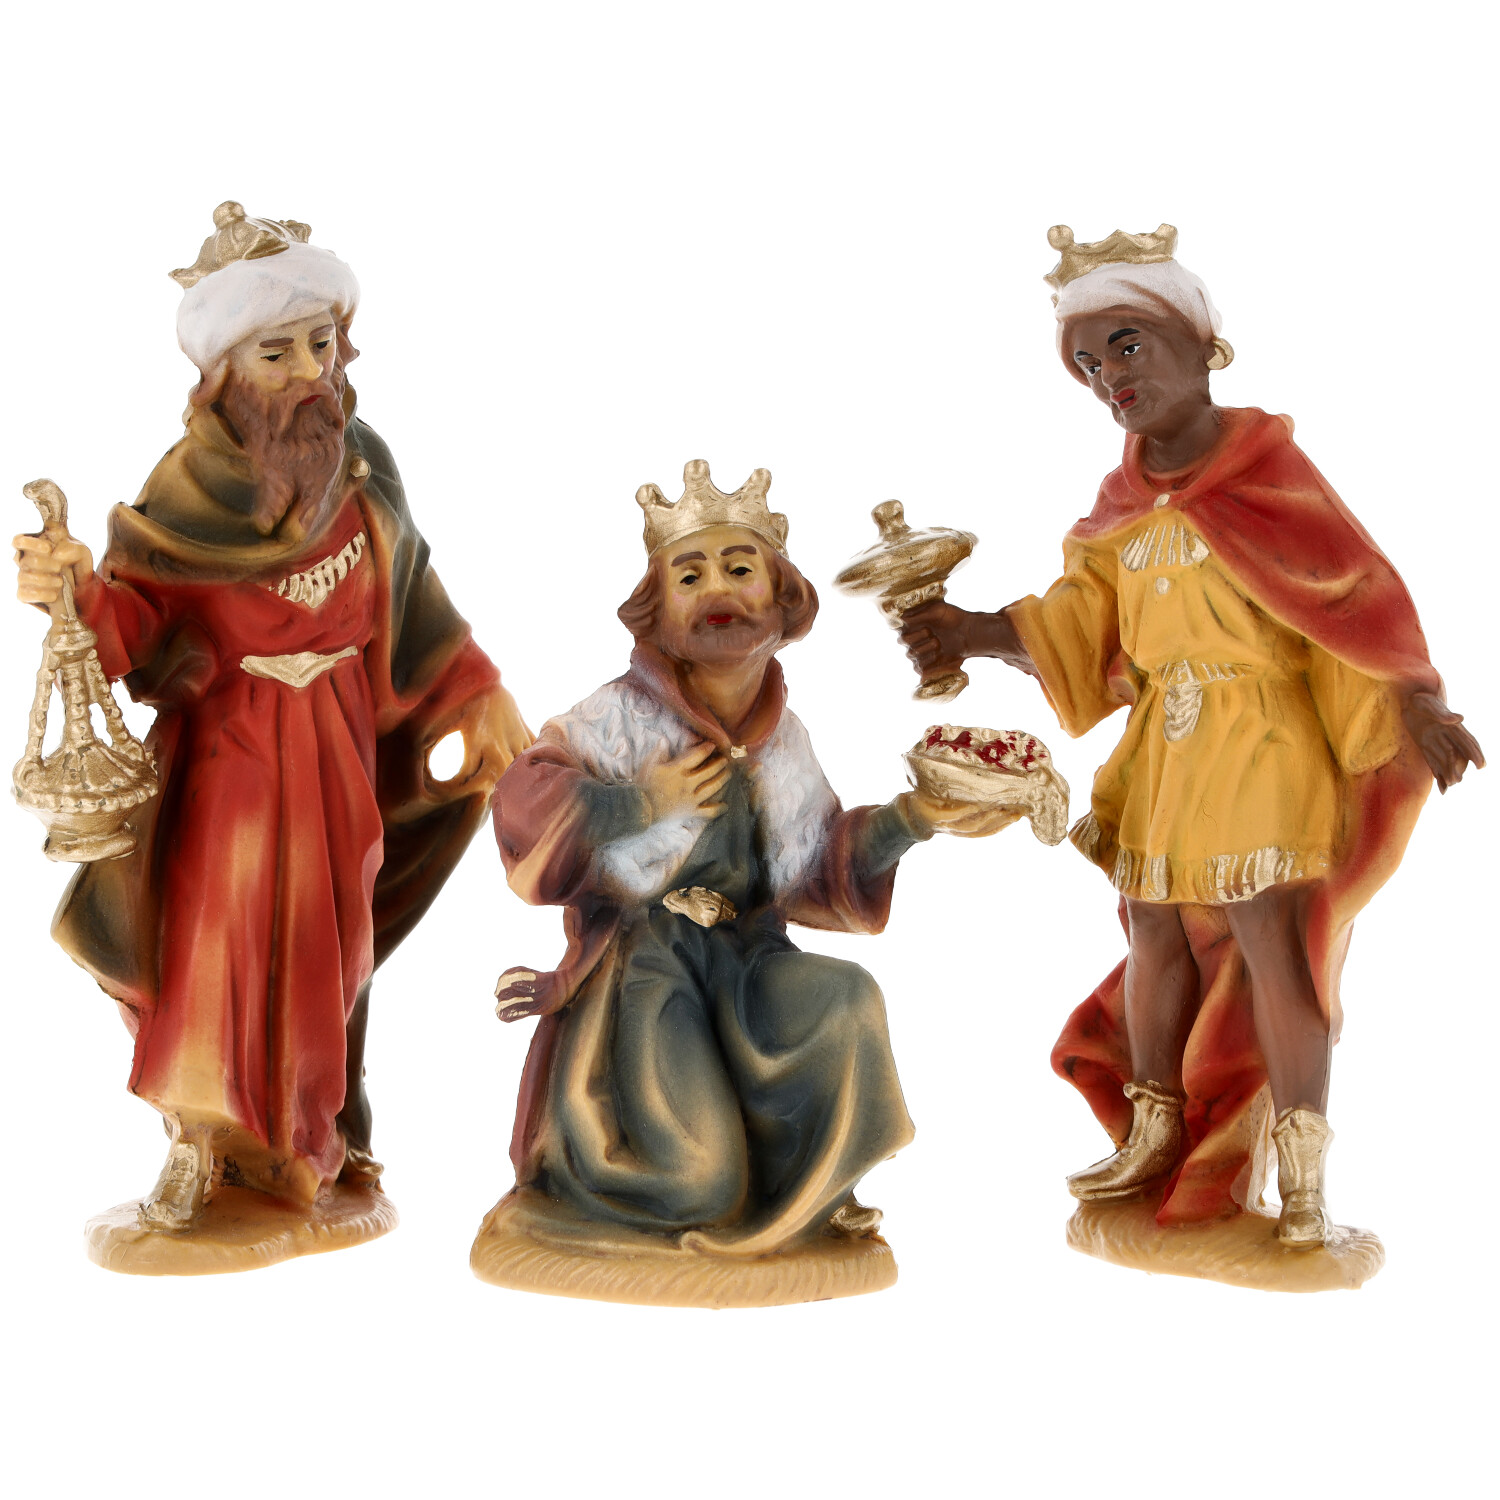 Heilige Drei Könige - Marolin Plastik - Krippenfiguren aus Kunststoff - made in Germany